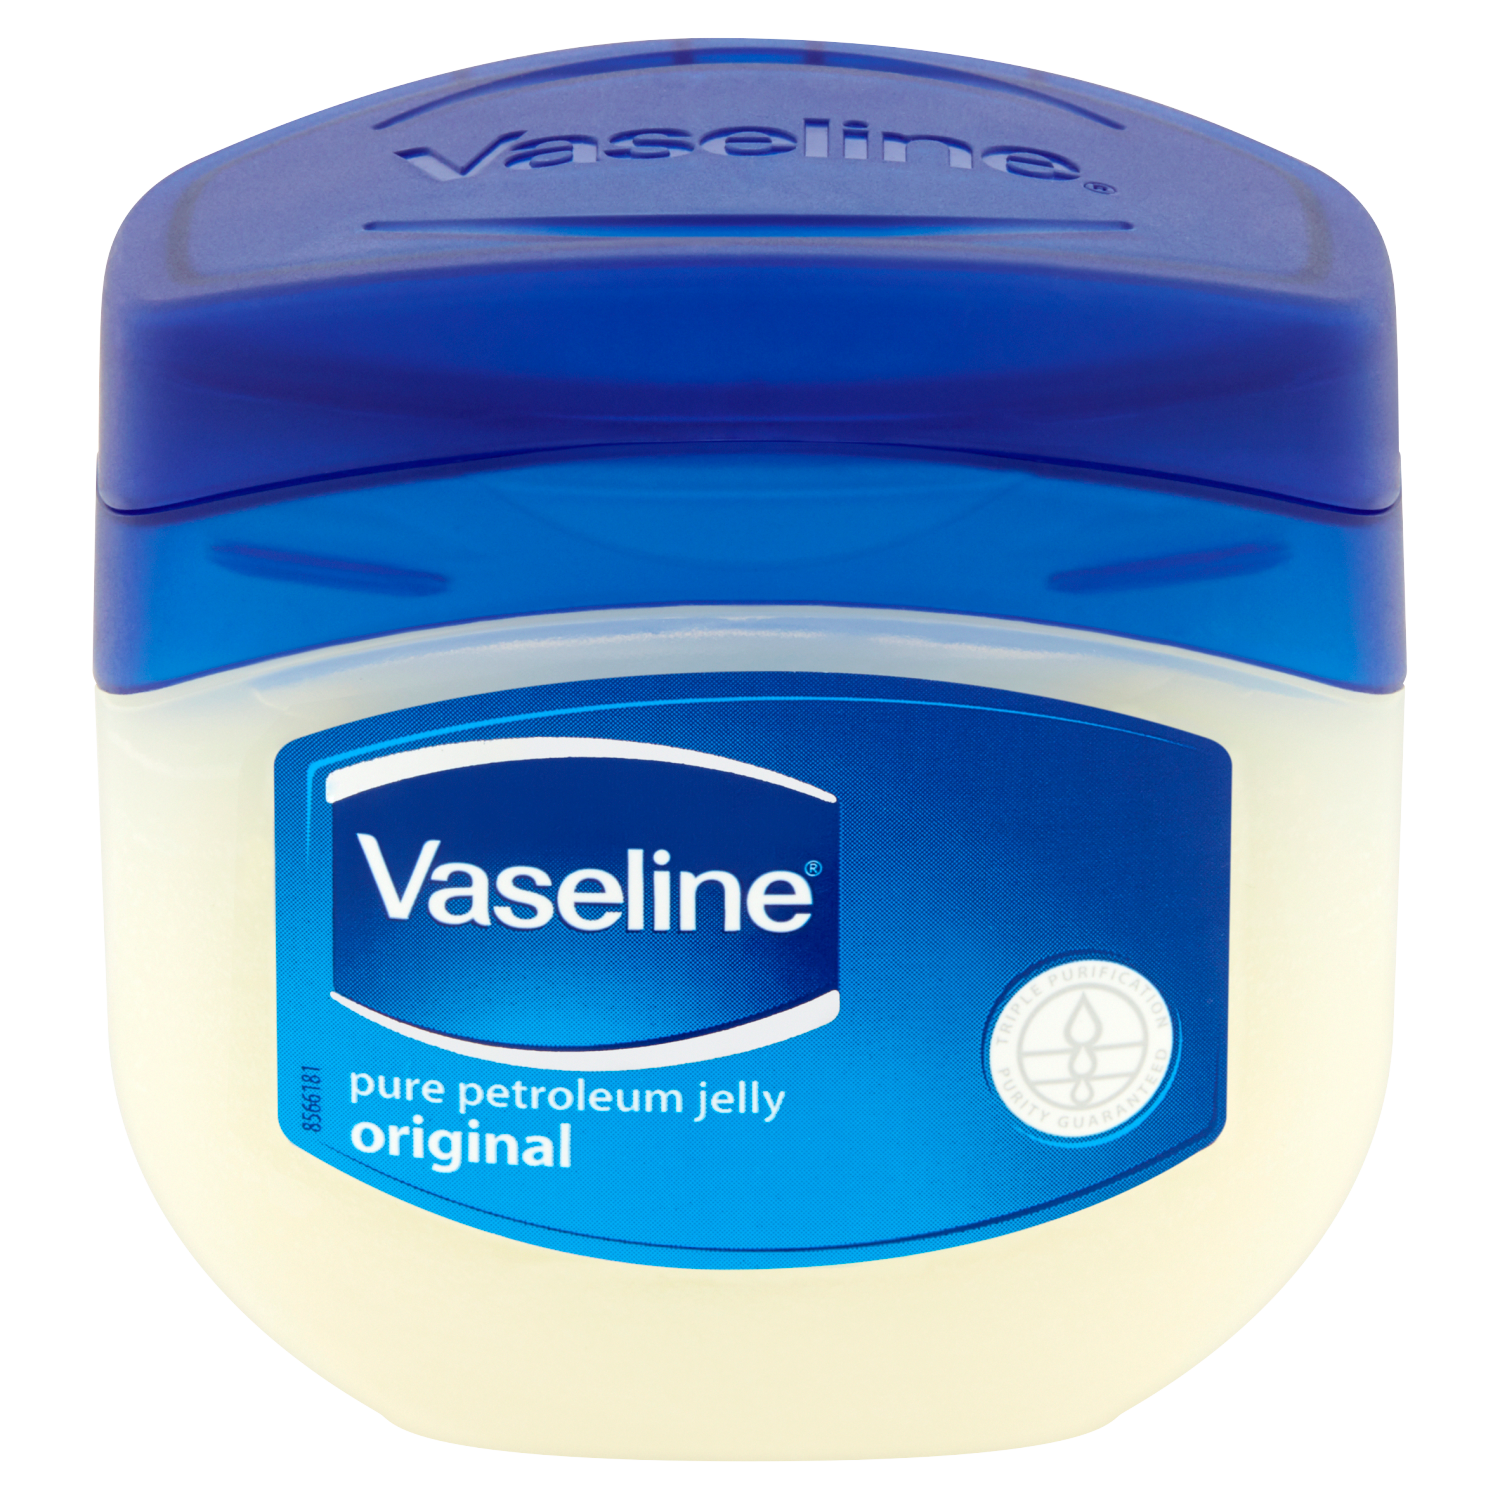 Vaseline Oryginal косметический вазелин, 100 мл vaseline 100% й чистый вазелин оригинальный 3 75 унции 106 г